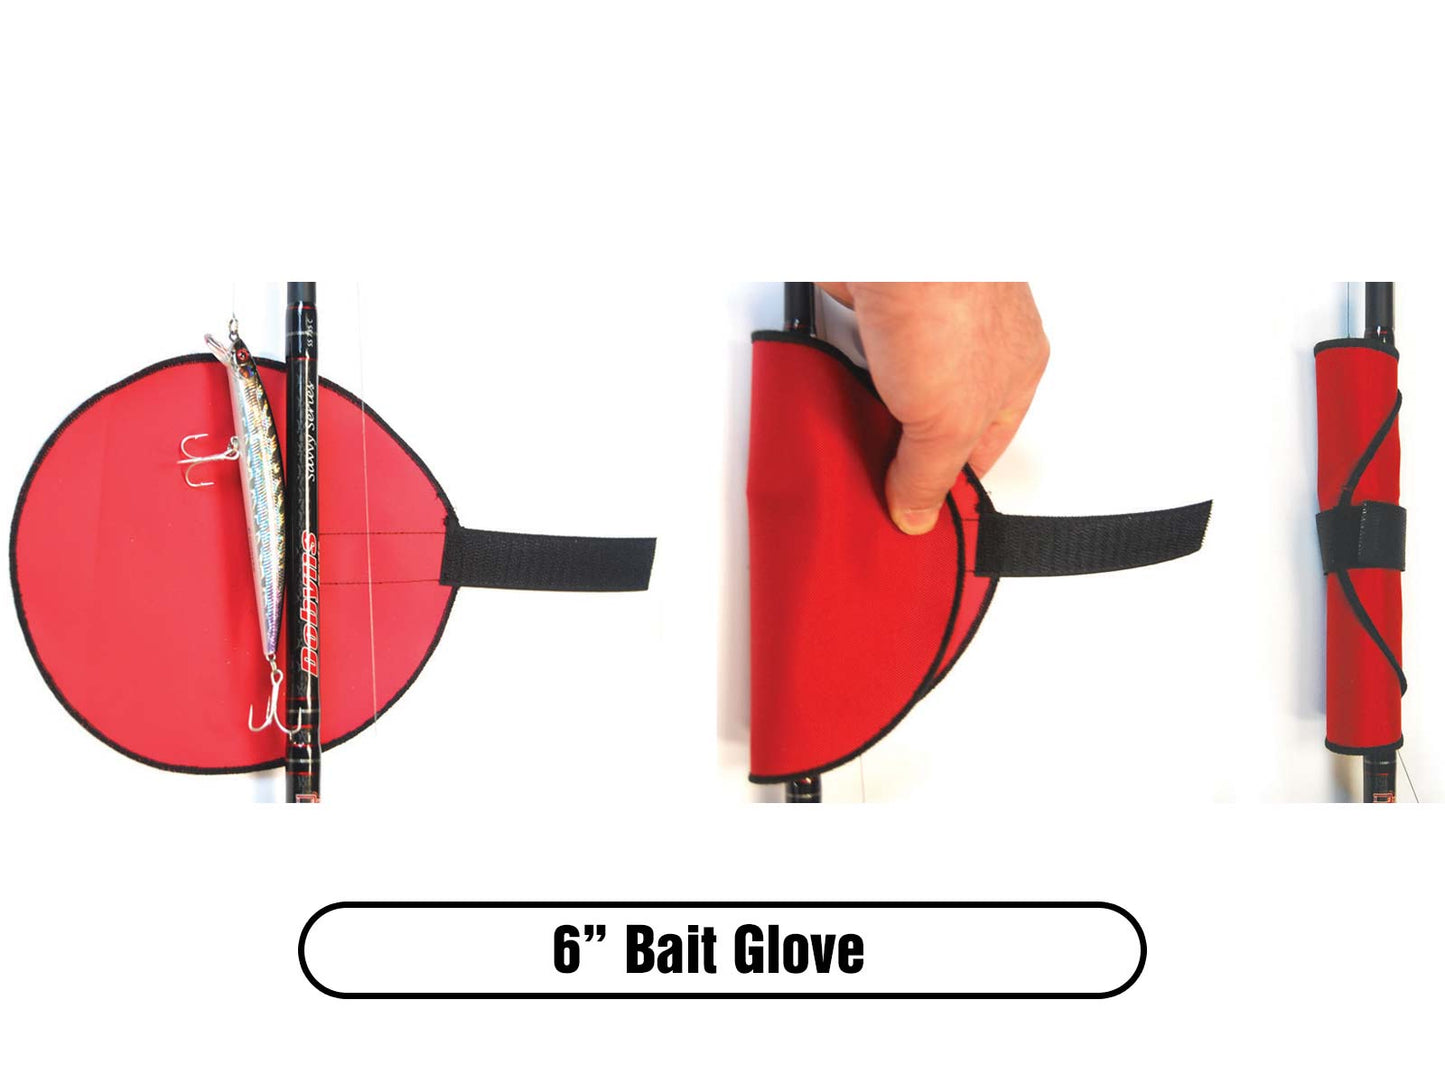 The Bait Glove